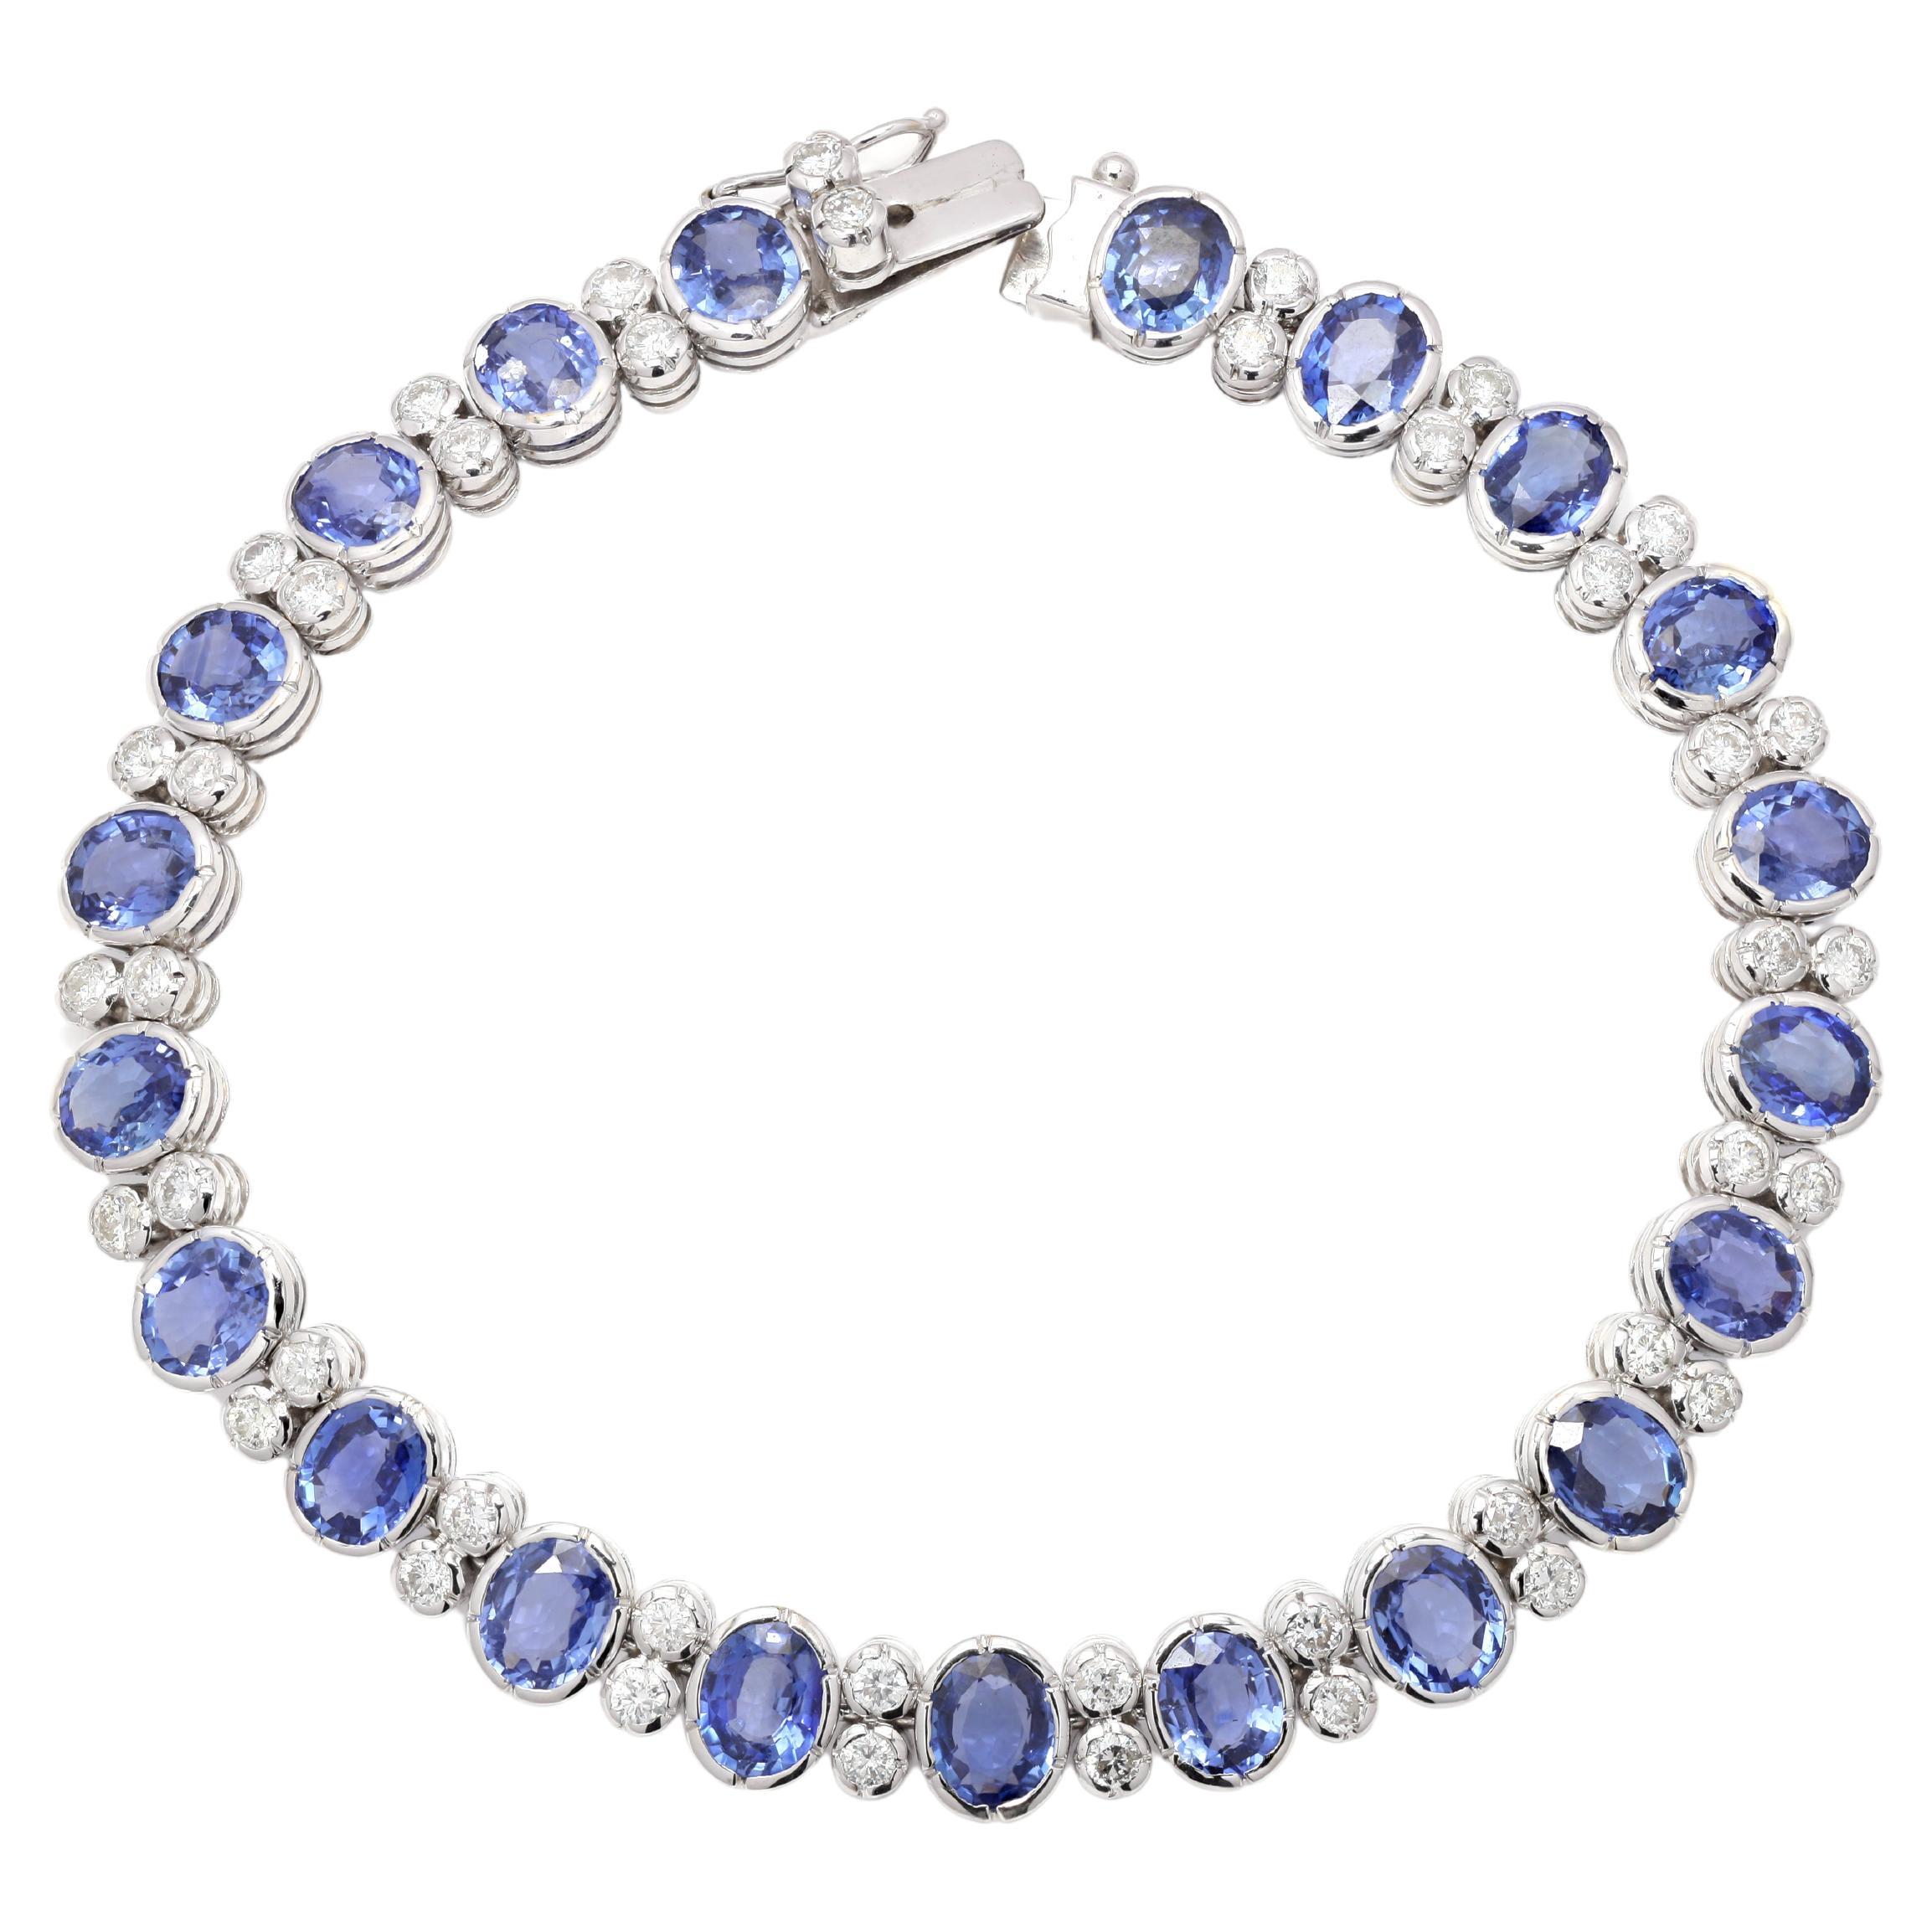 15.45 Carat Blue Sapphire Wedding Bracelet with Diamonds Inset 18K White Gold